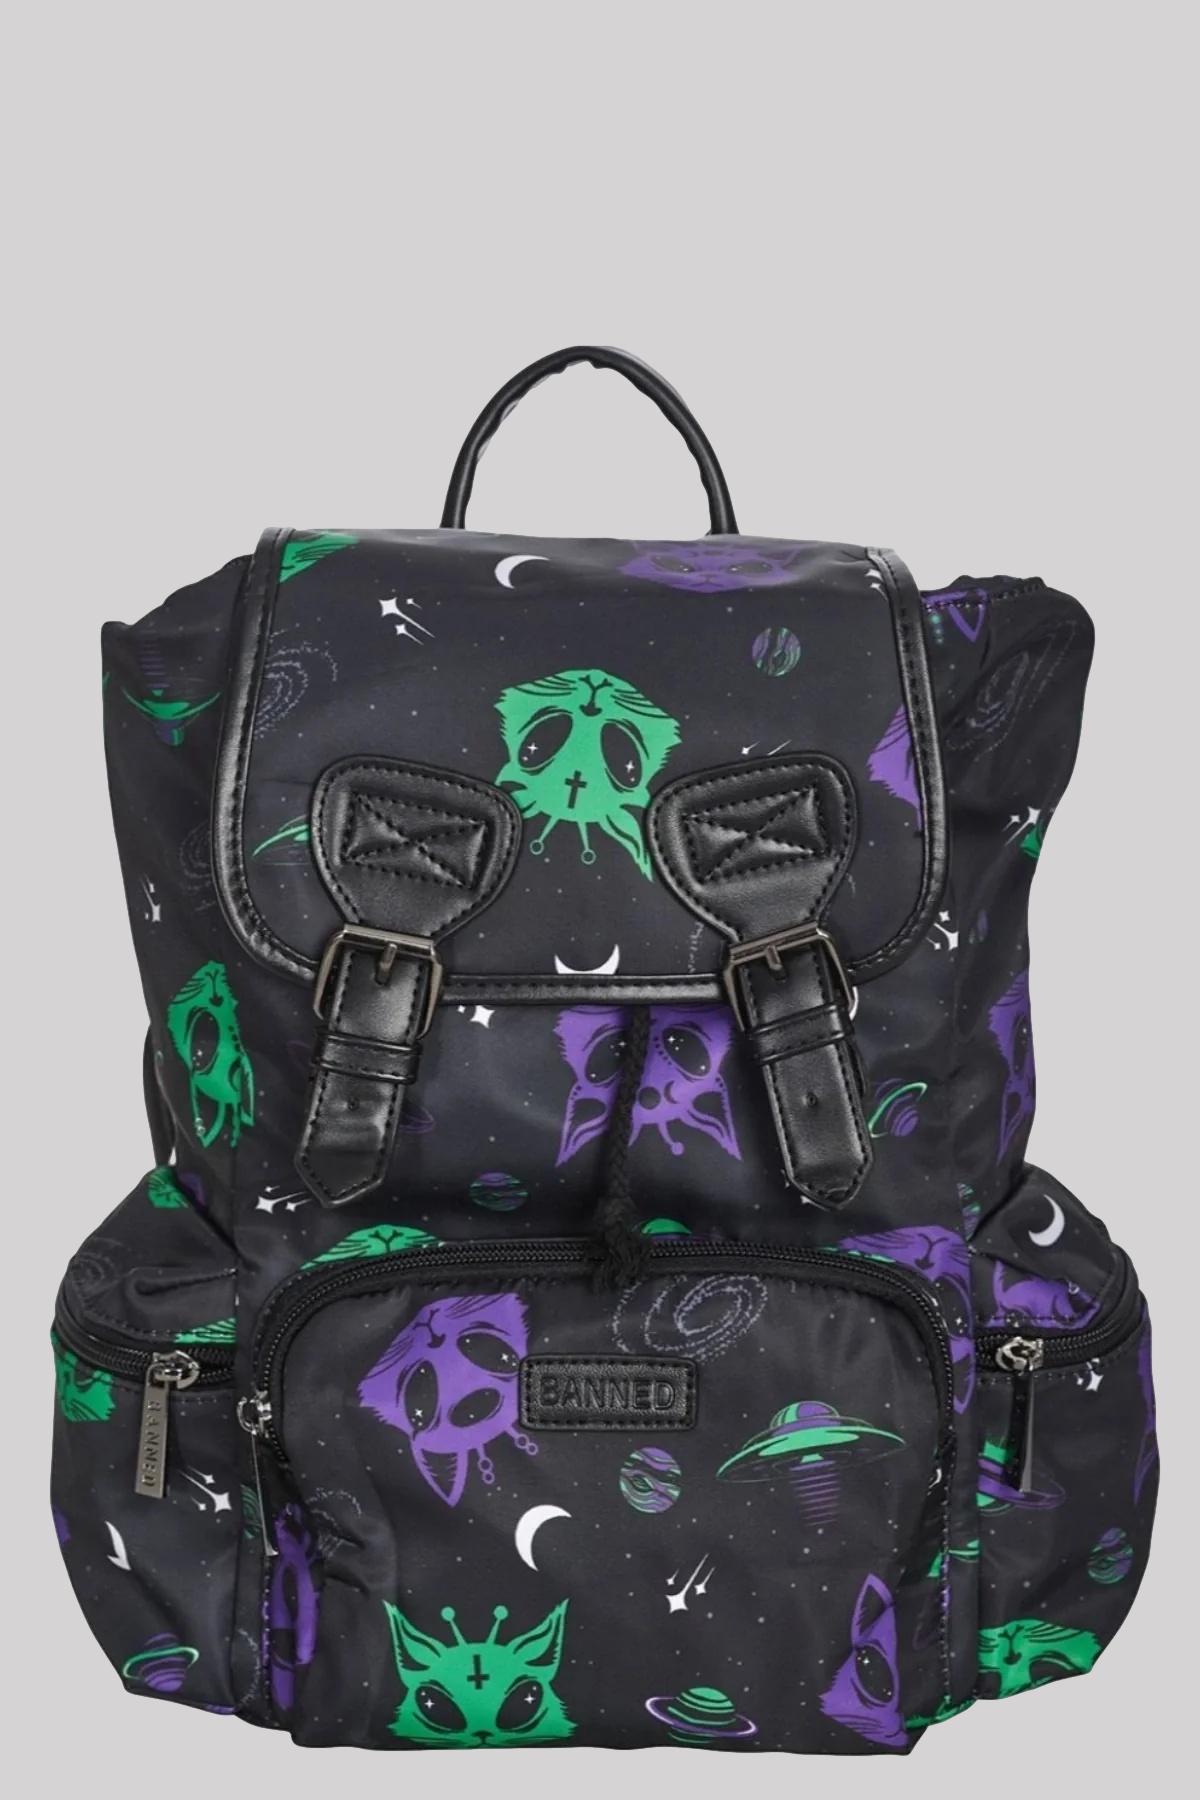 Banned Alien Cat Waterproof Gothic Backpack